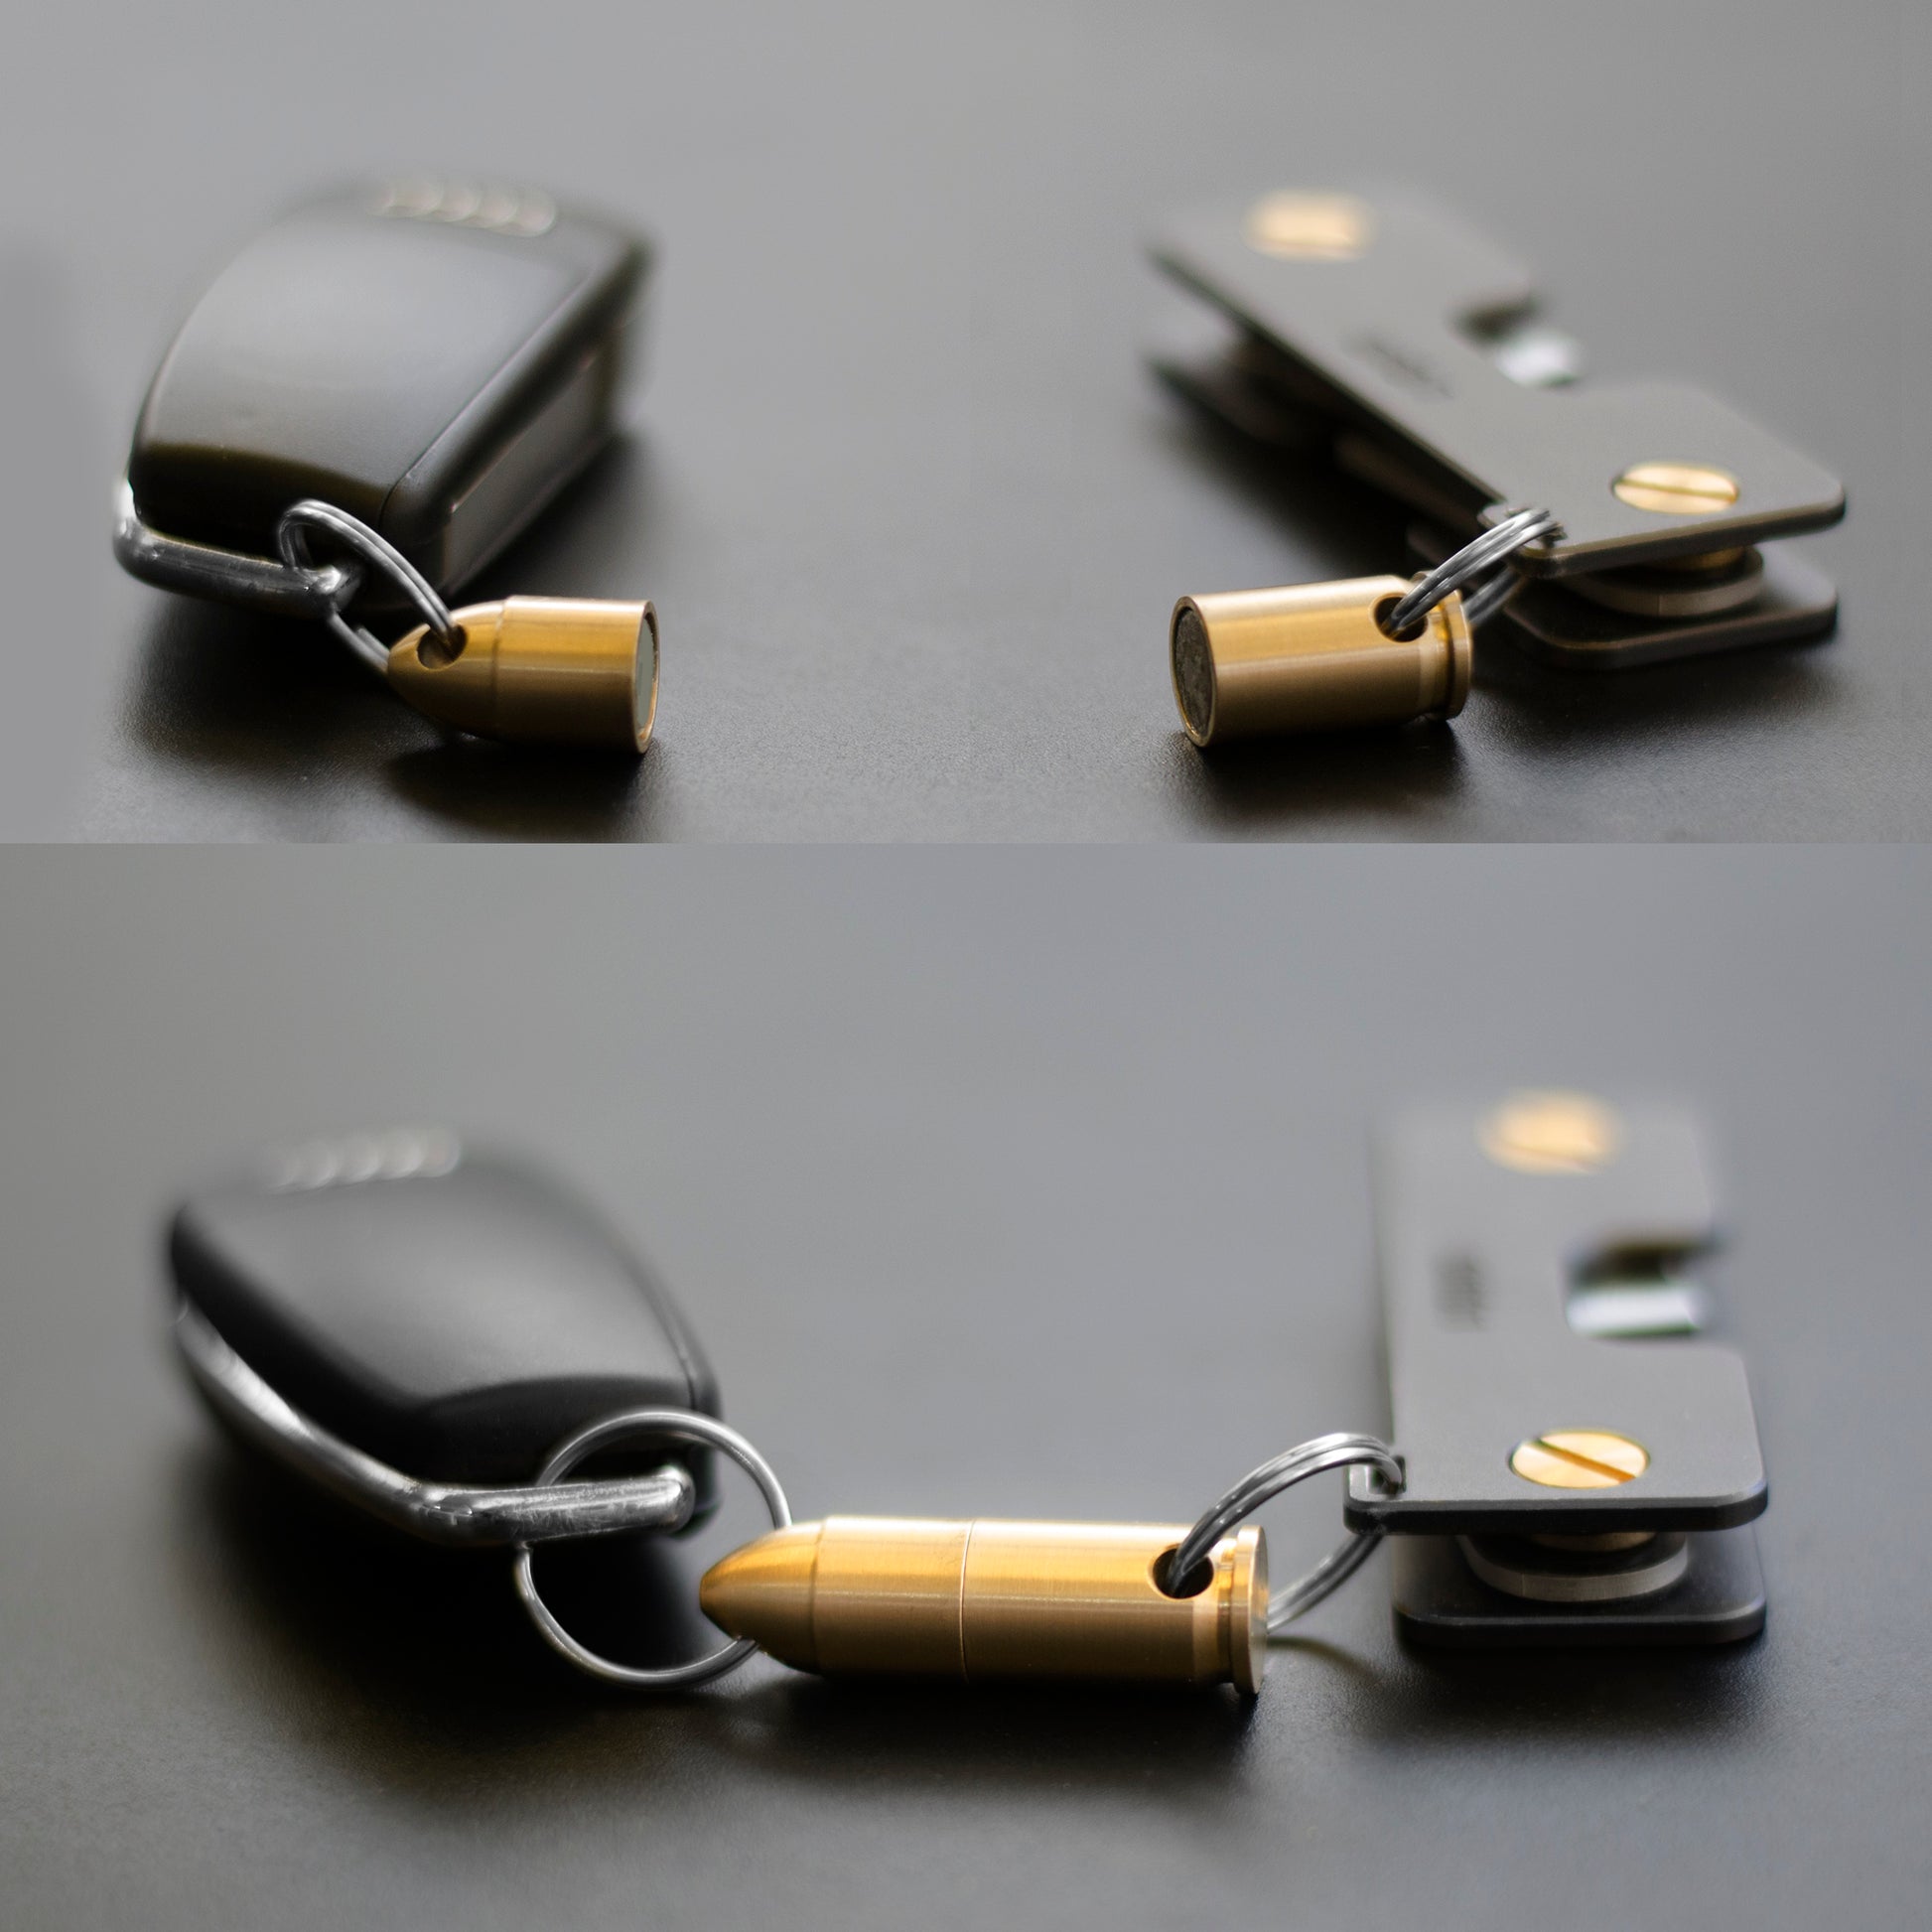 Titanium Keychain EDC Secure Key Quick Release Easy Access Keys